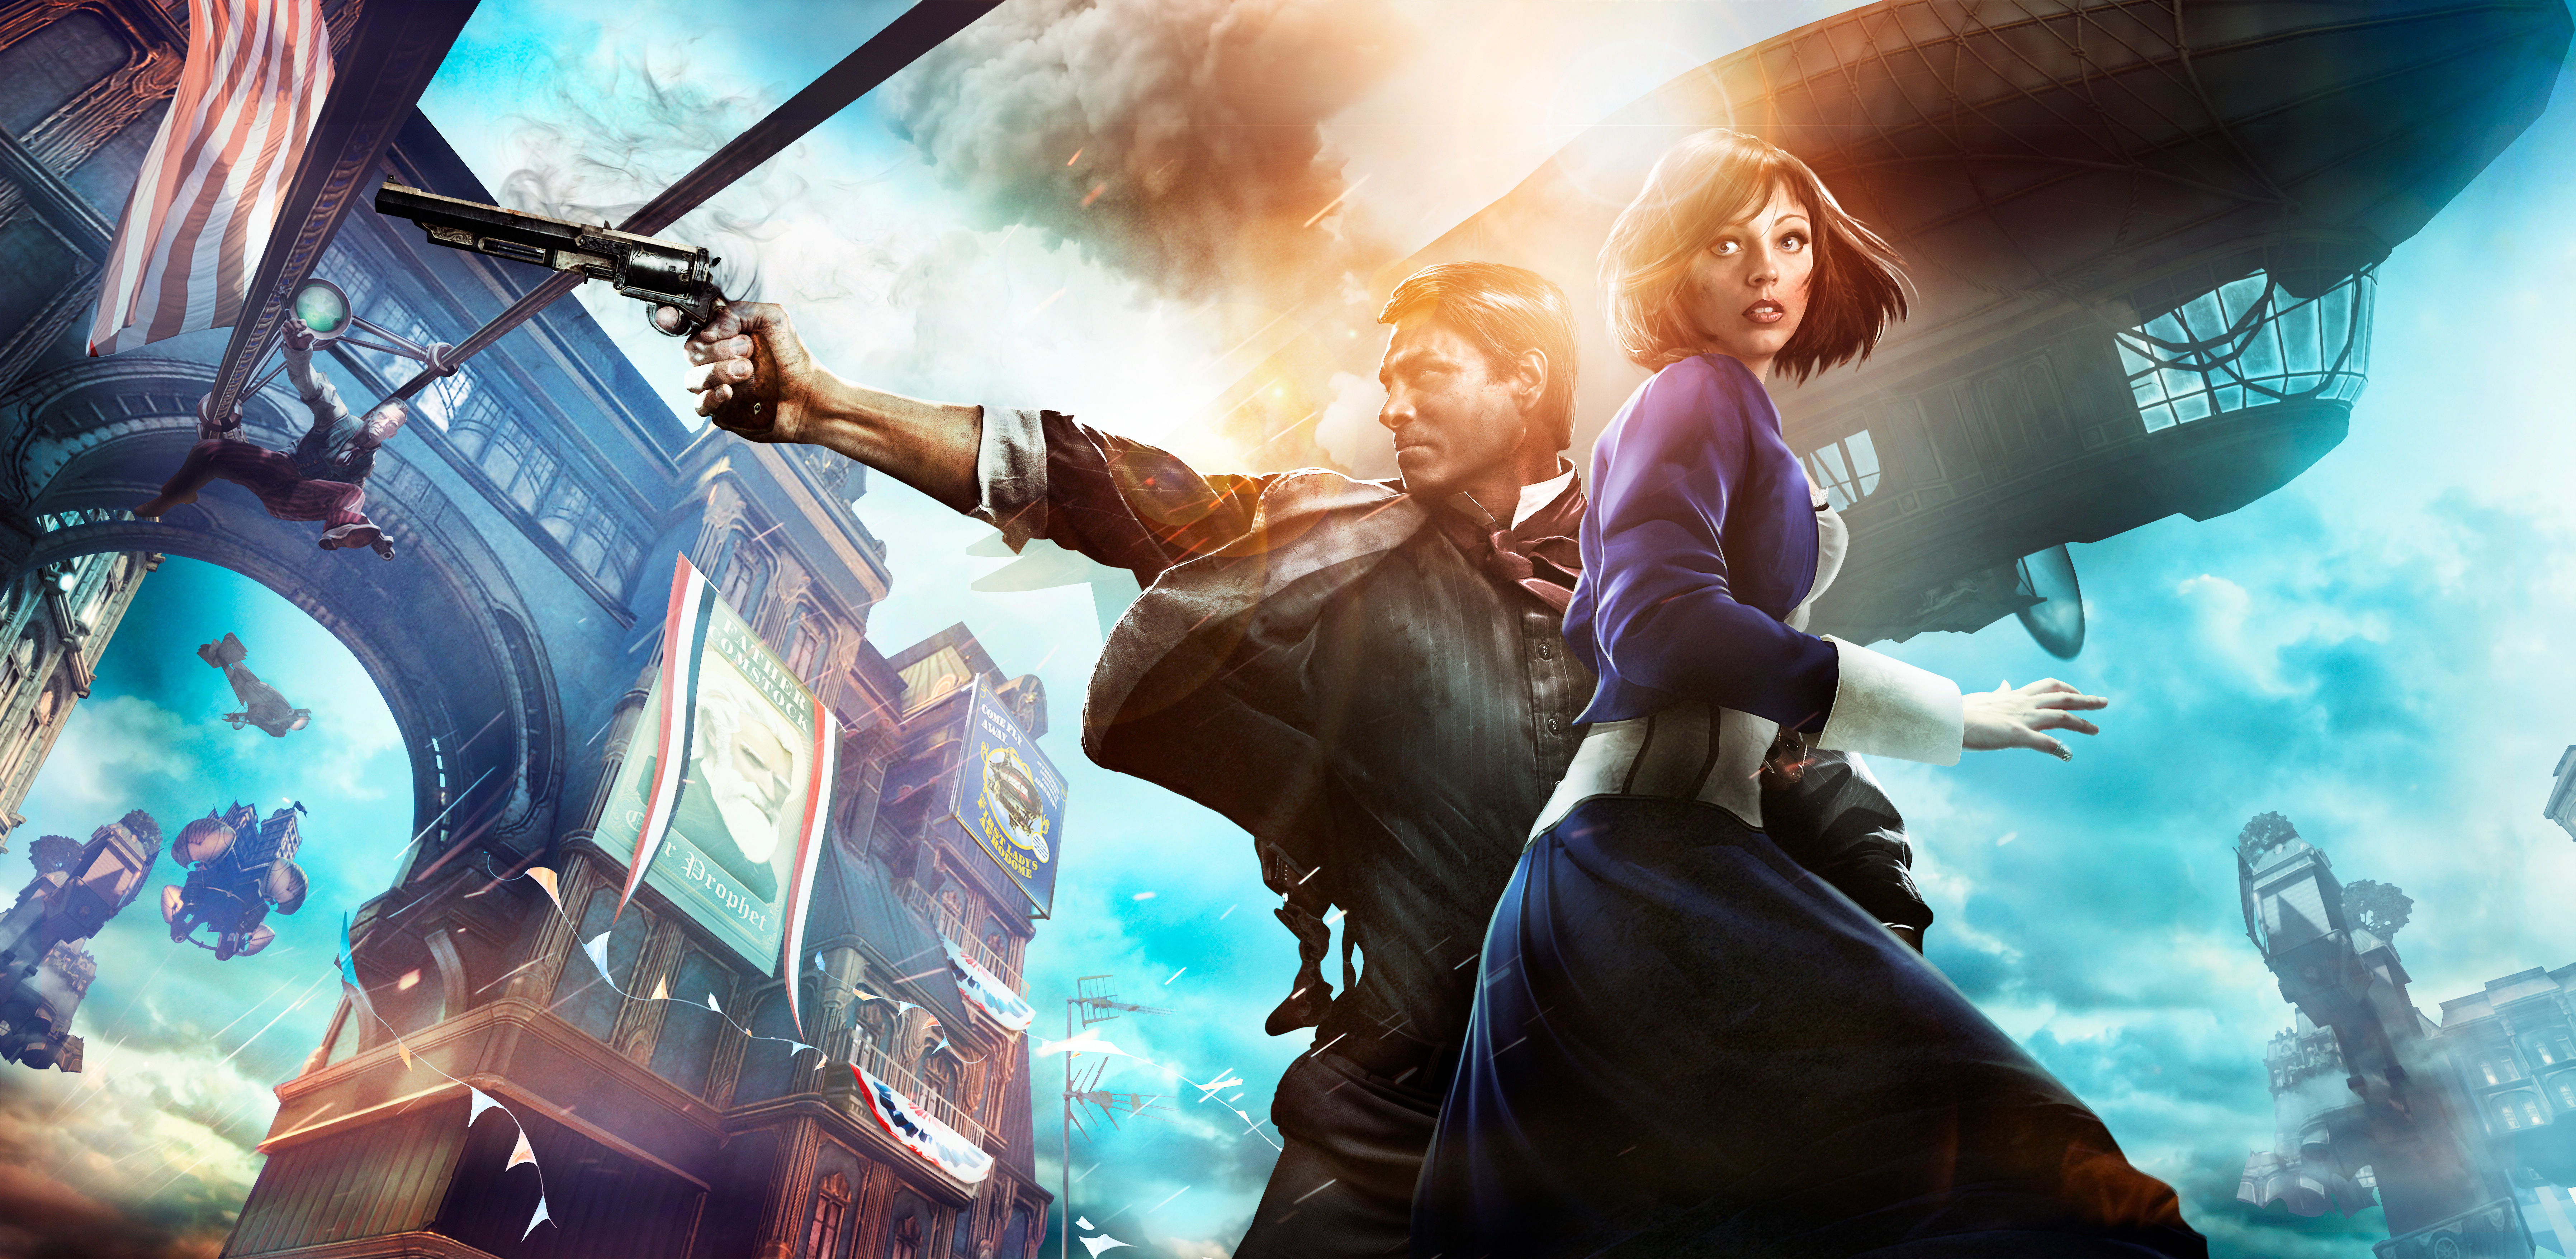 Video Game Bioshock Infinite 4k Ultra HD Wallpaper